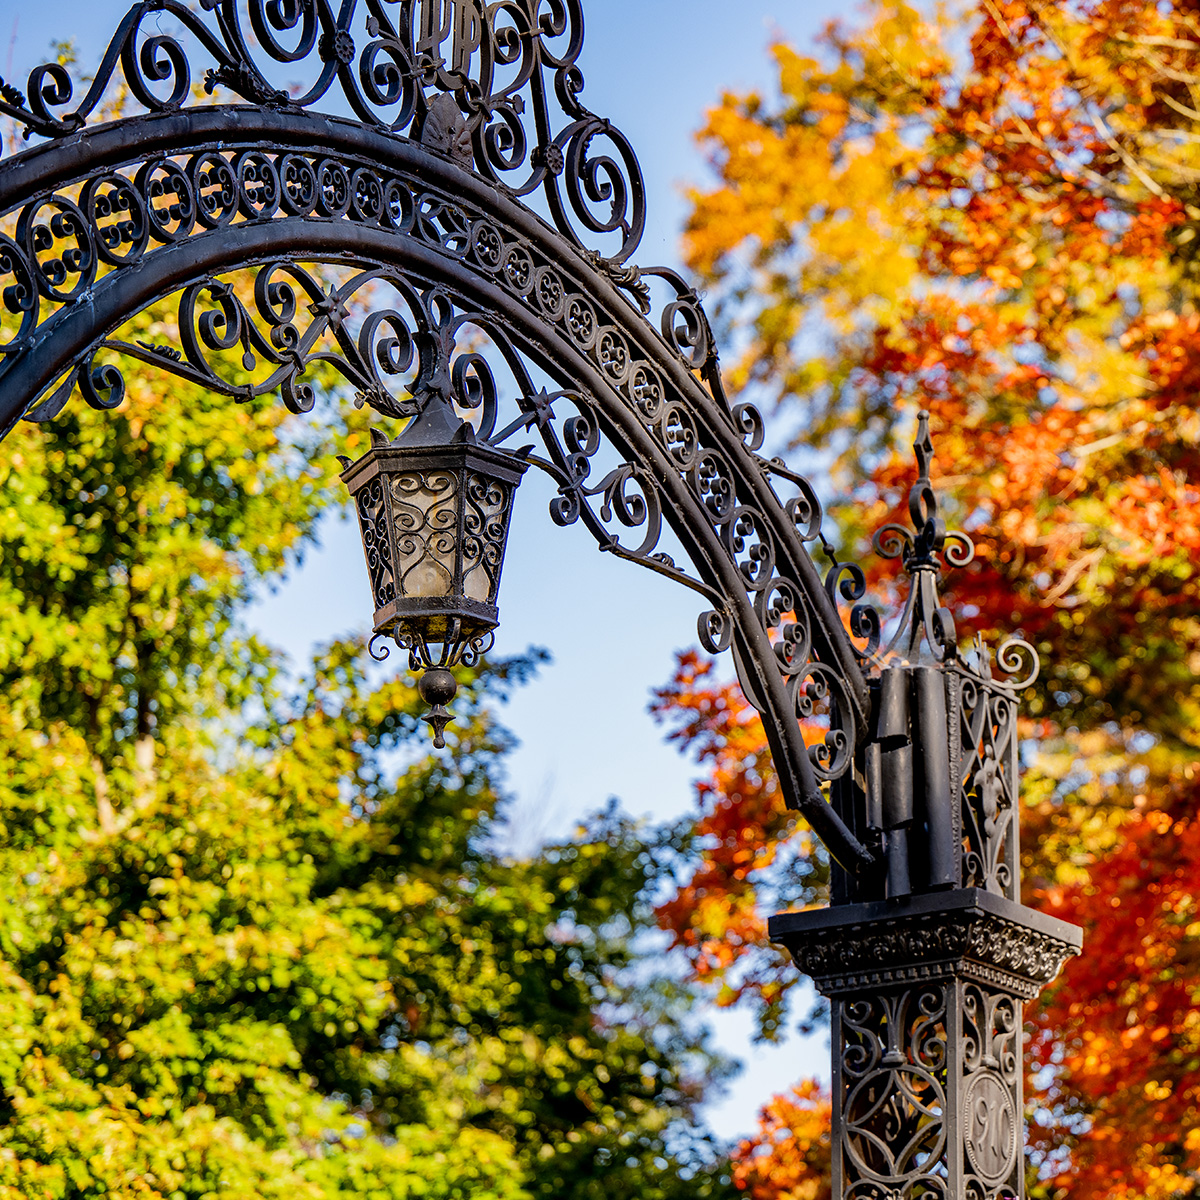 The gates in autumn